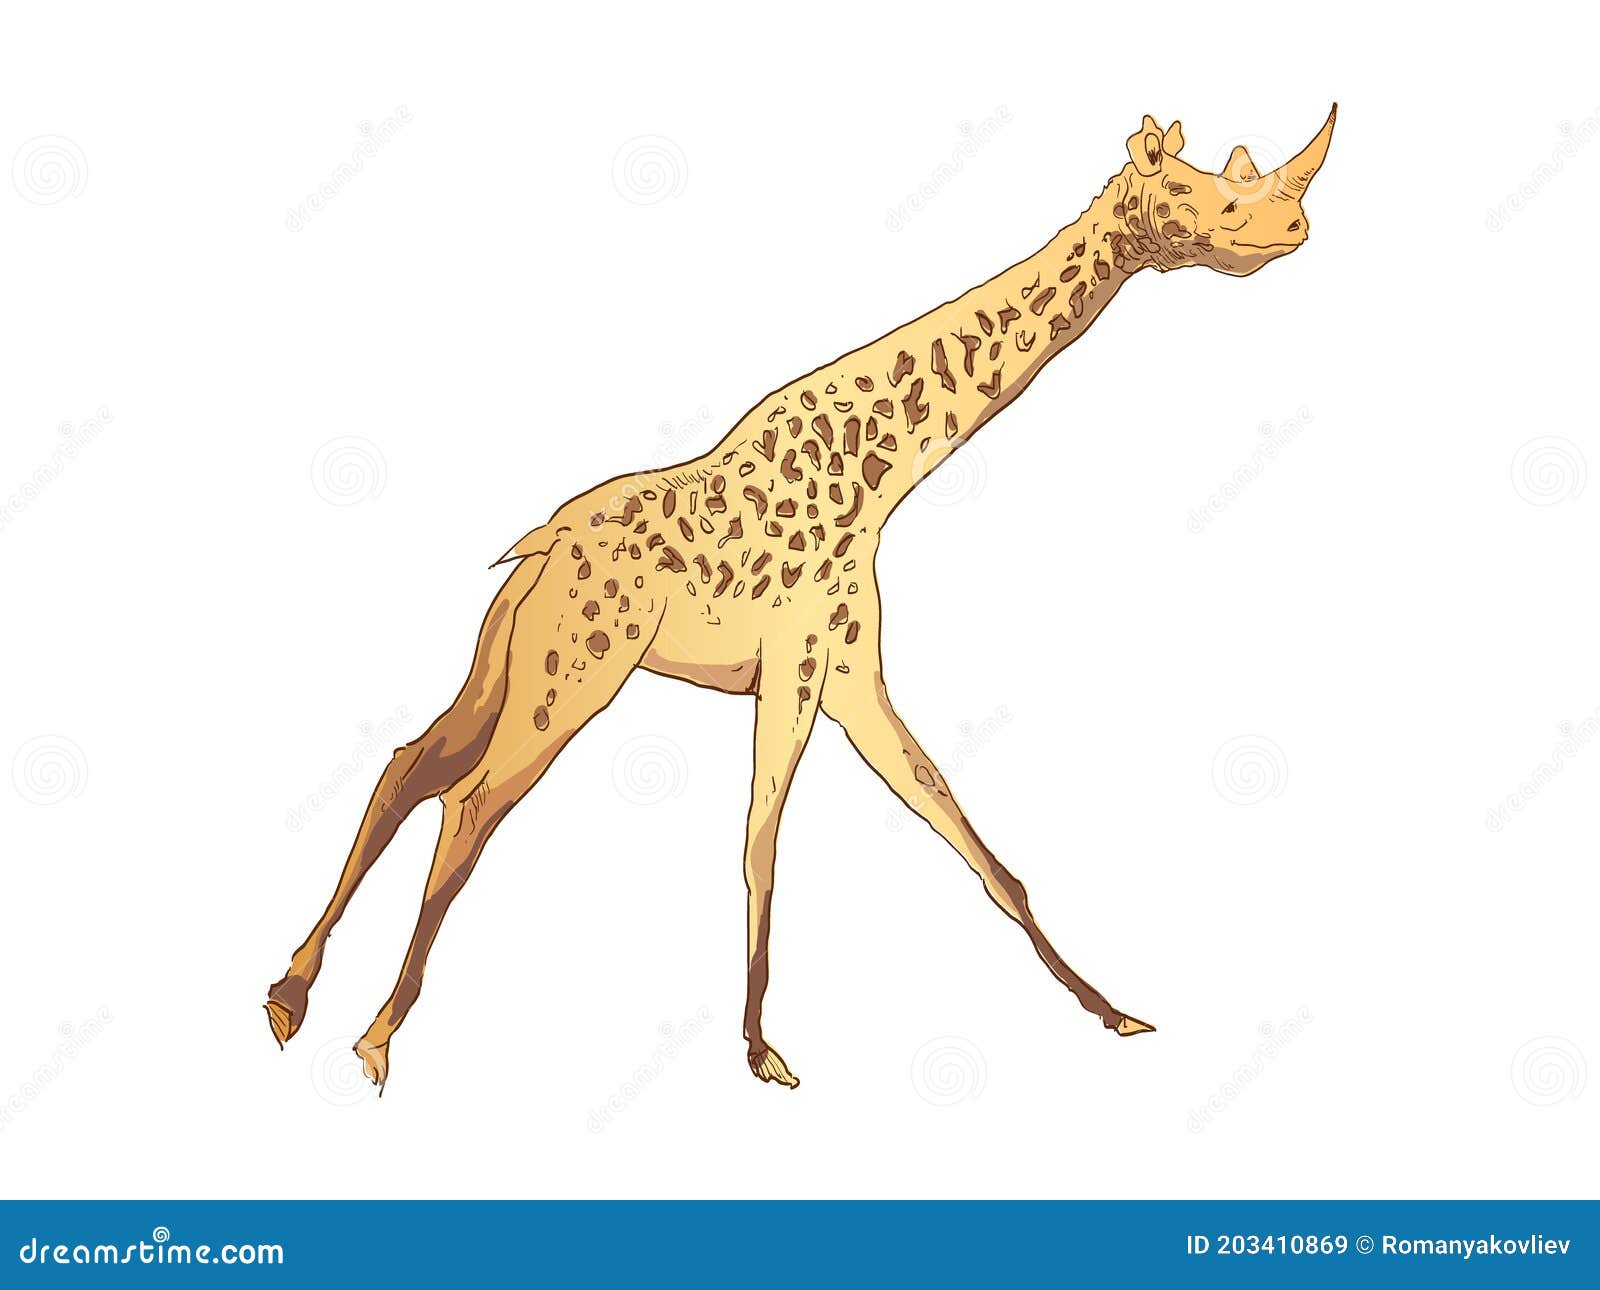 Unusual Mixture of Animals. Giraffe with a Rhinoceros Head. Hybrids Species  Sketch. Fantasy Art Stock Vector - Illustration of artist, predator:  203410869